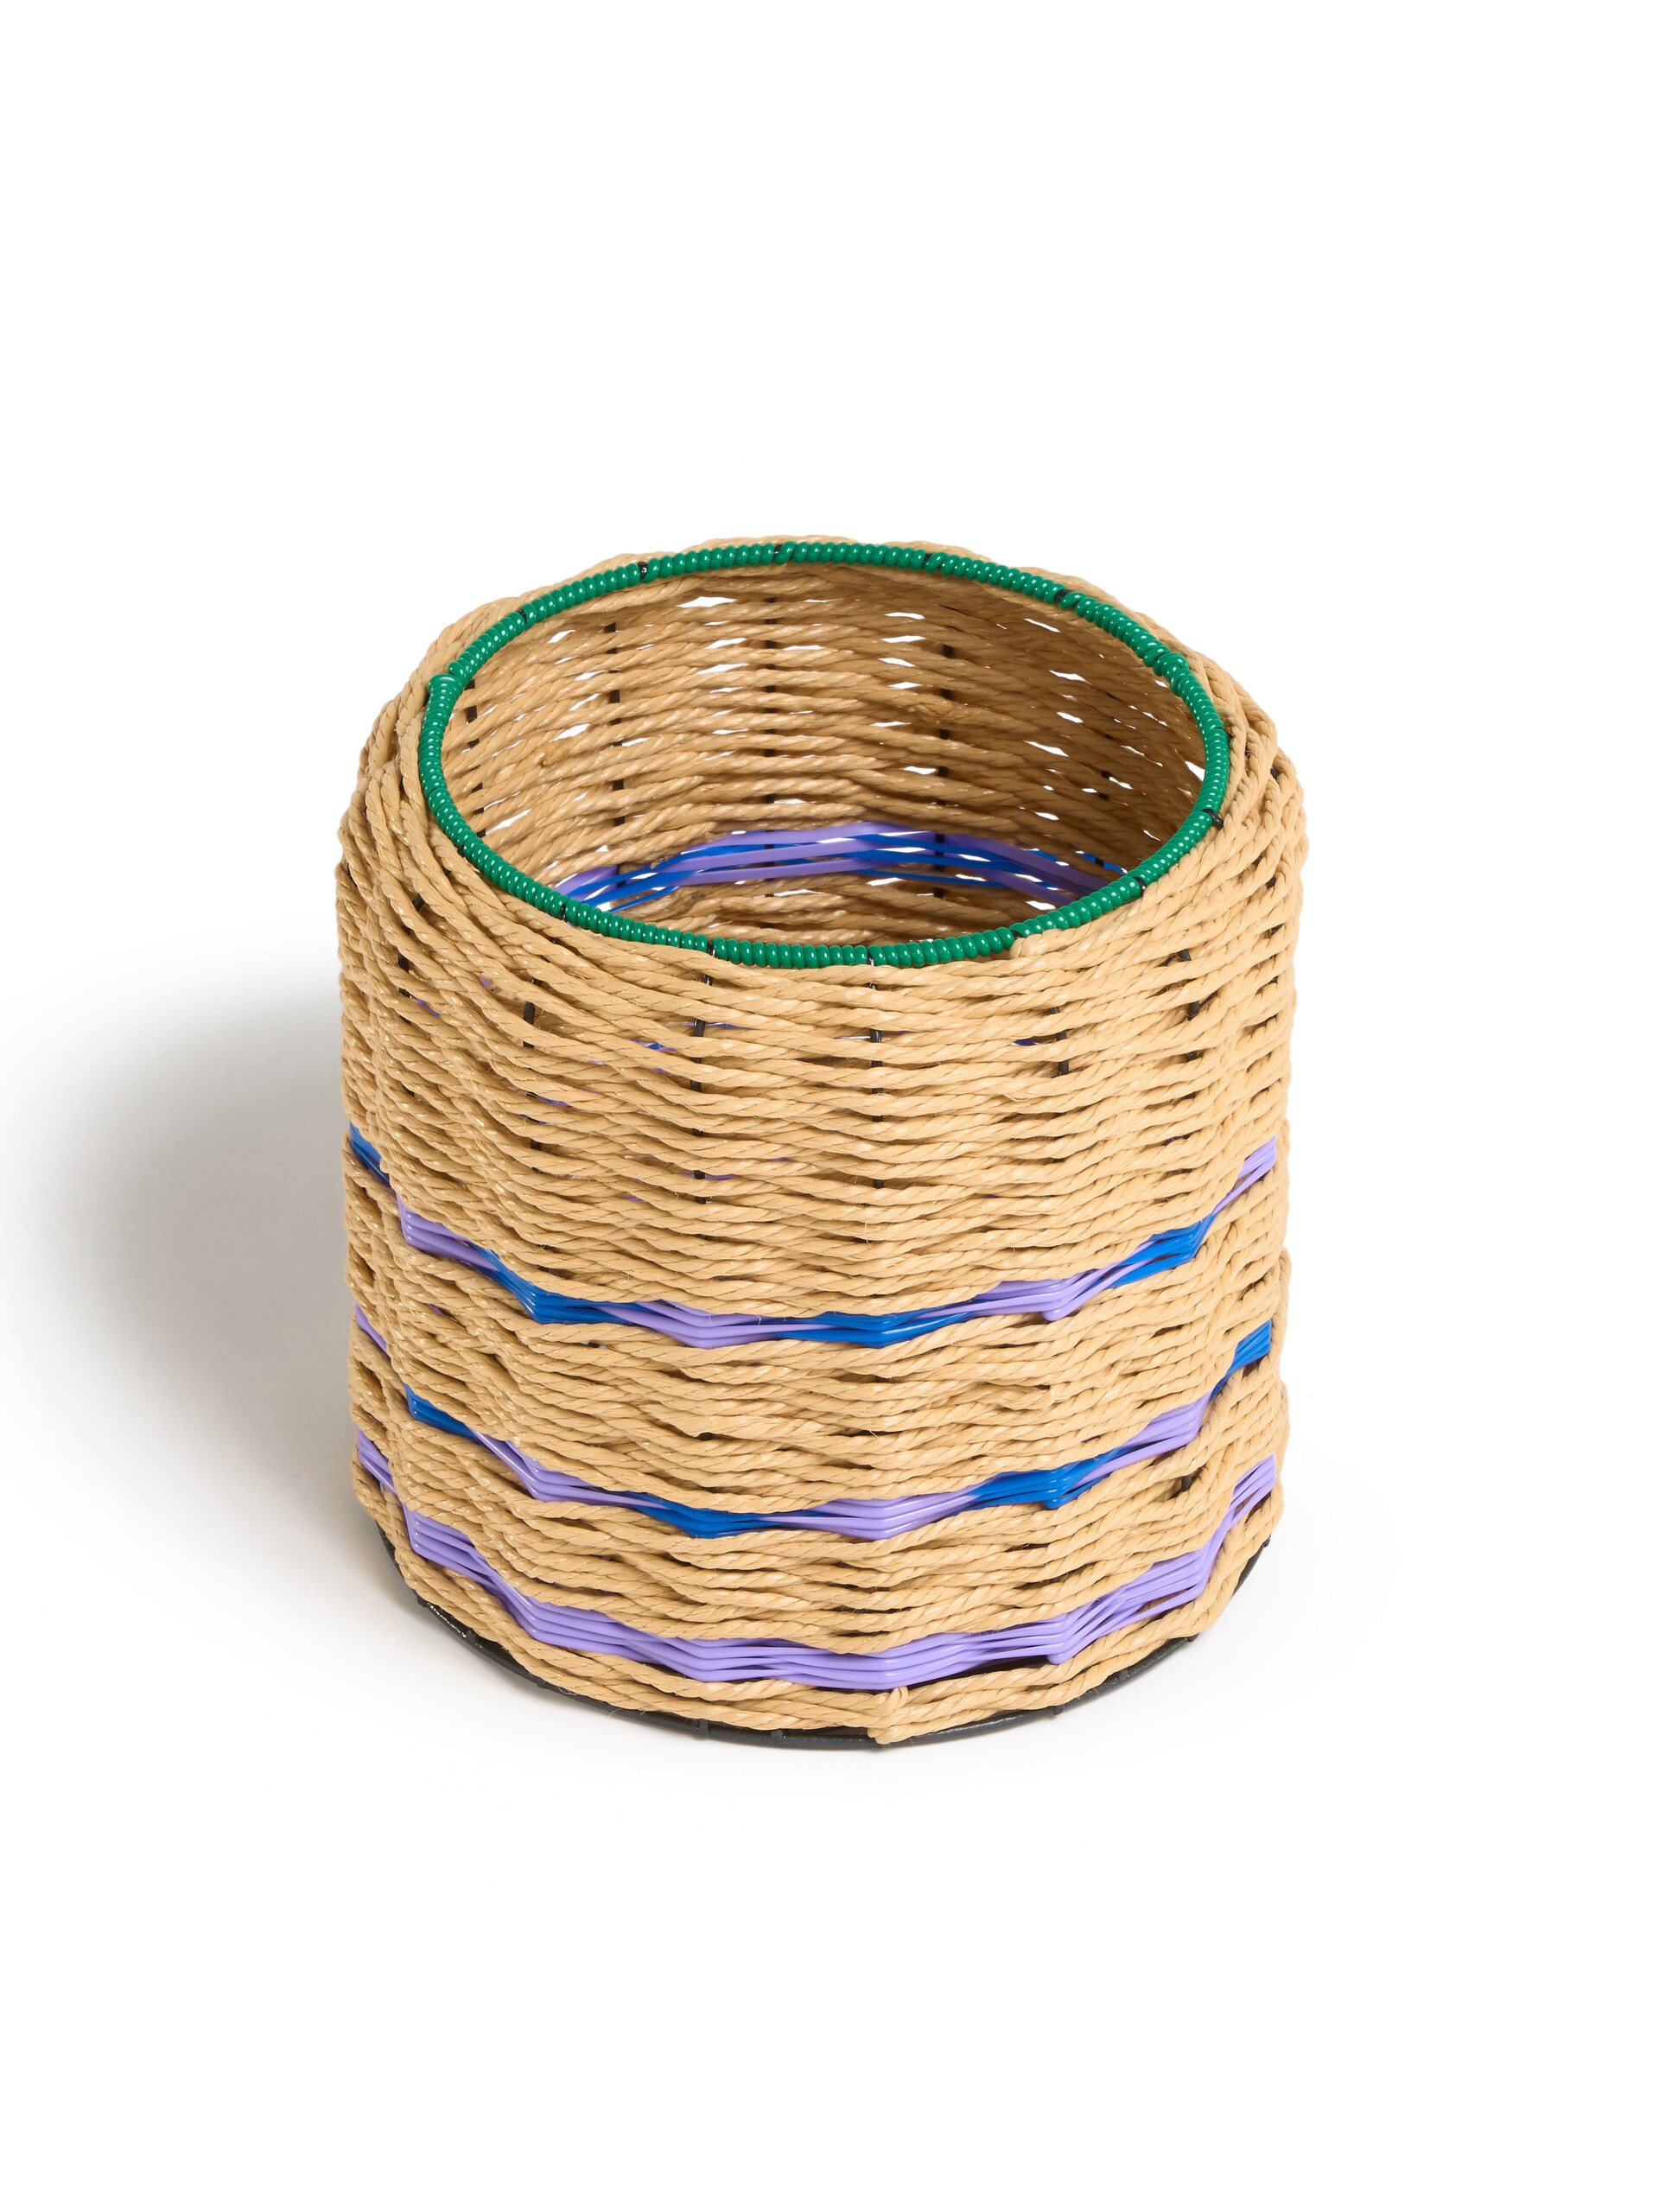 MARNI MARKET blue raffia-effect basket - Accessories - Image 3